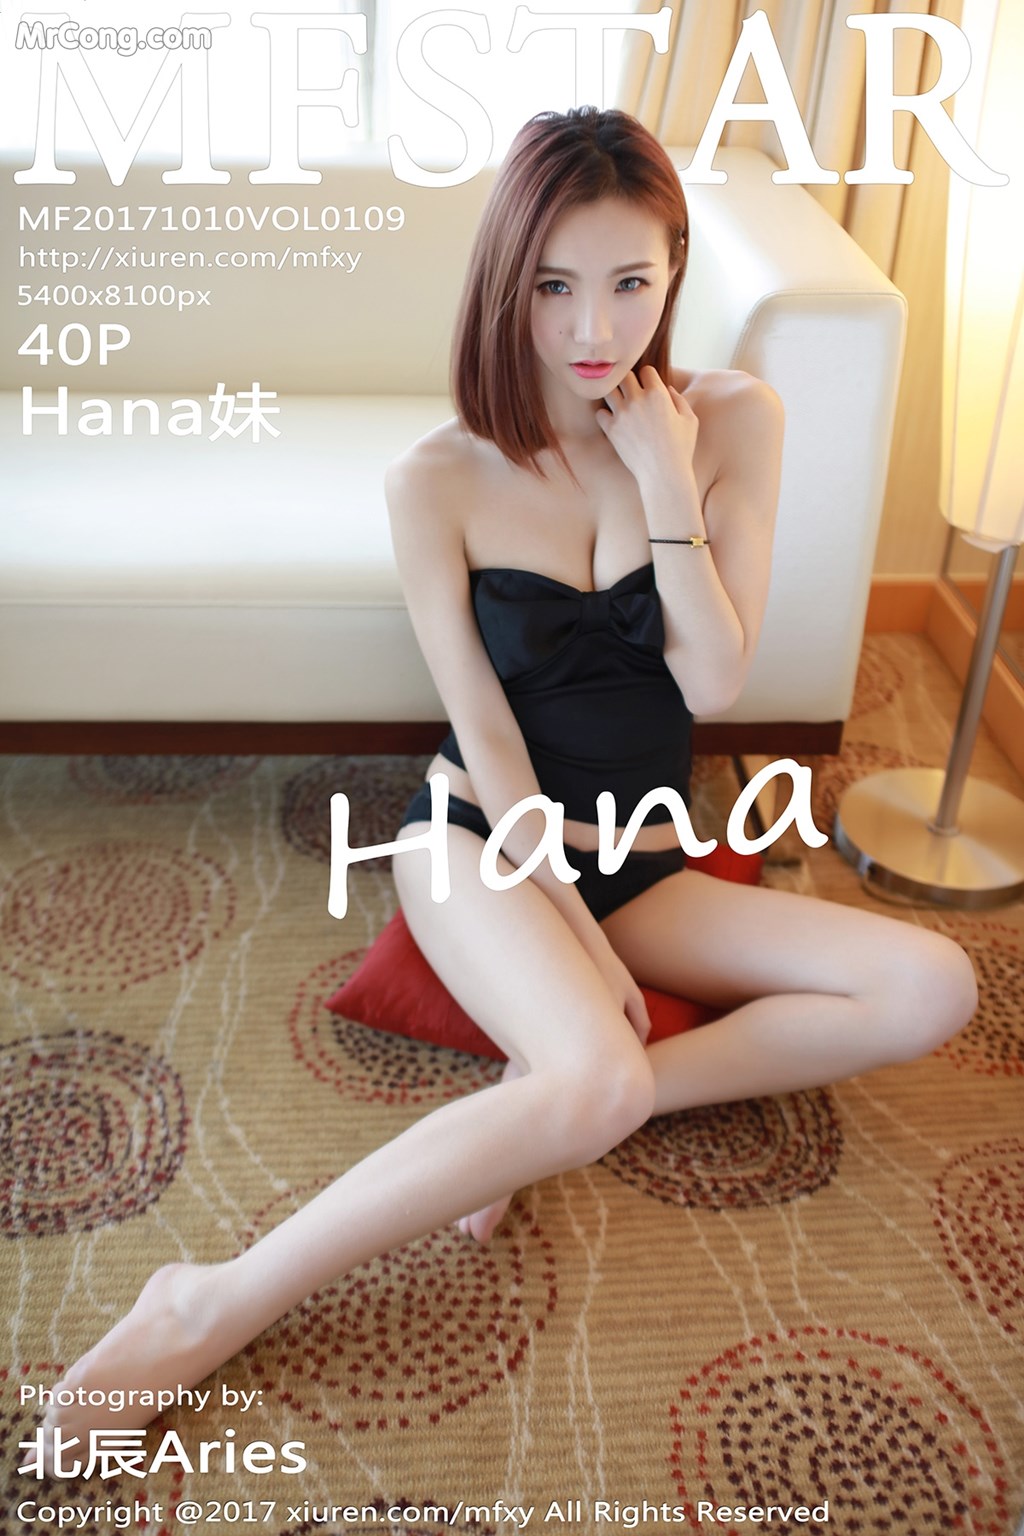 MFStar Vol.109: Hana Model 妹 (41 photos) photo 1-0